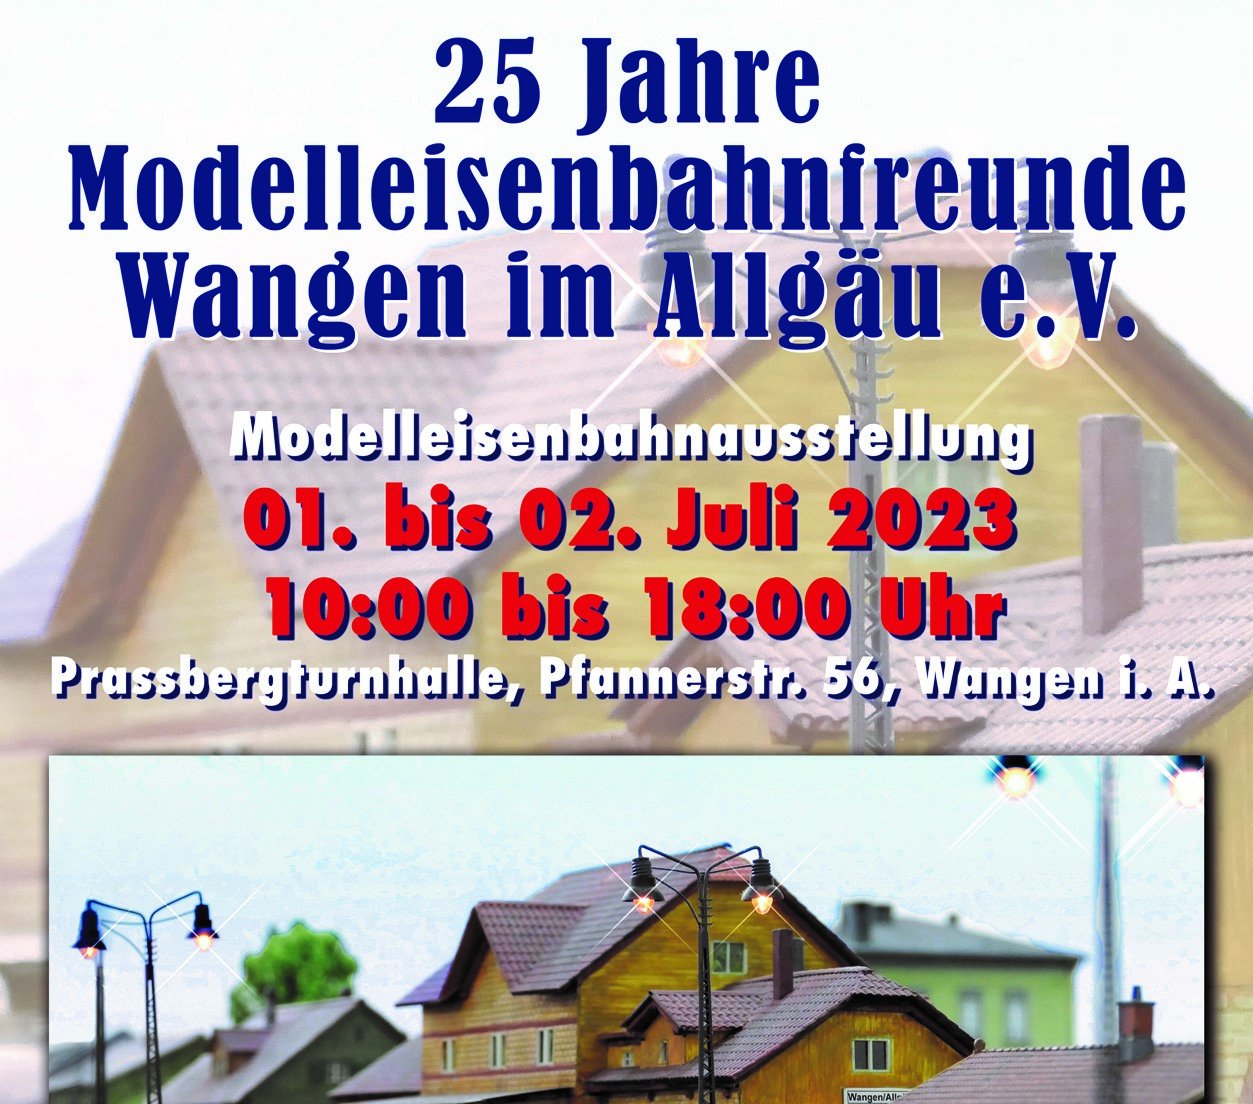 25 Jahre Modelleisenbahnfreunde Wangen im Allgäu e. V.